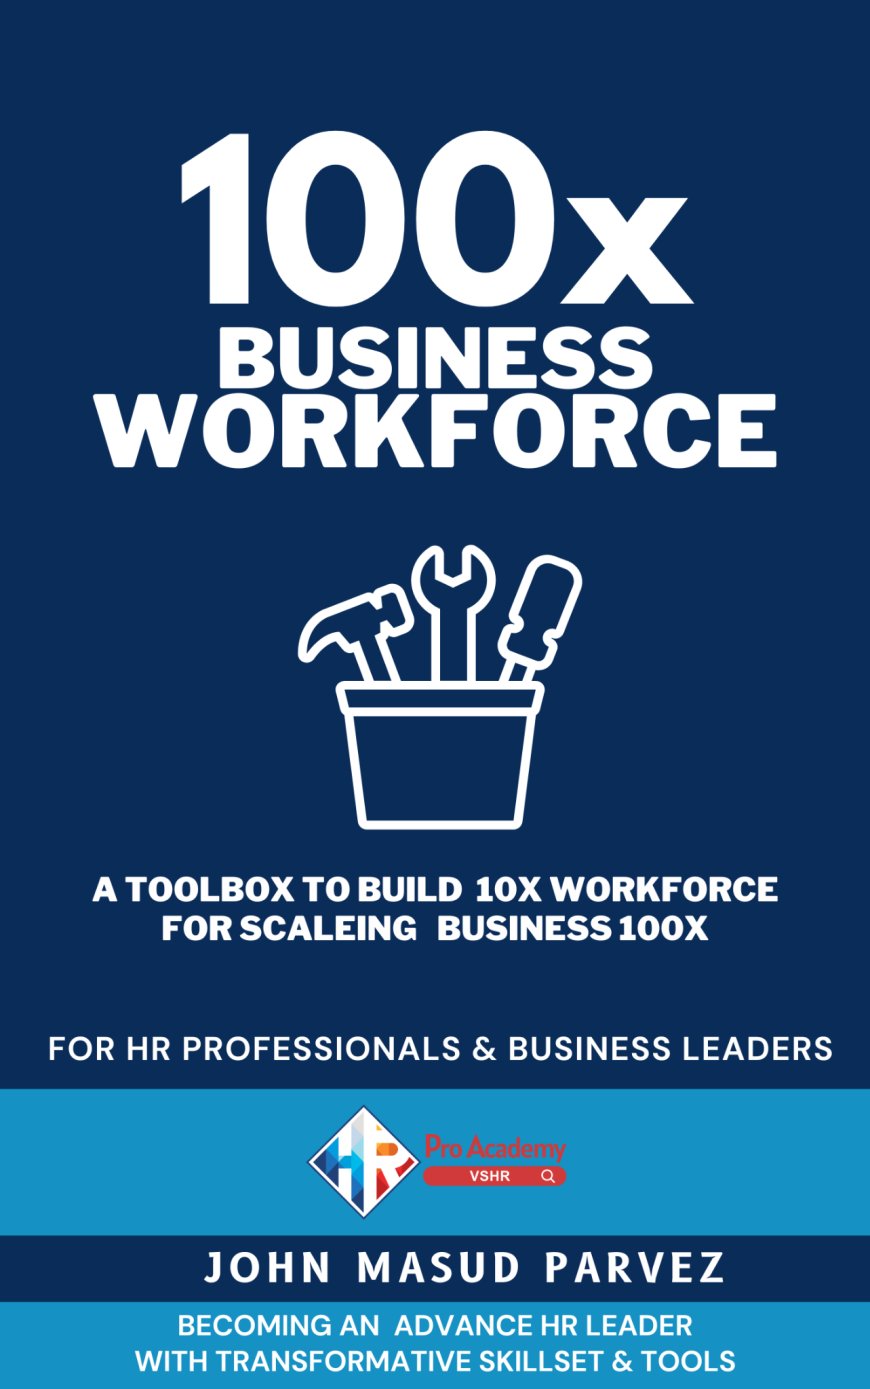 Revolutionize Your Workforce: Key Insights from 100x Business Workforce